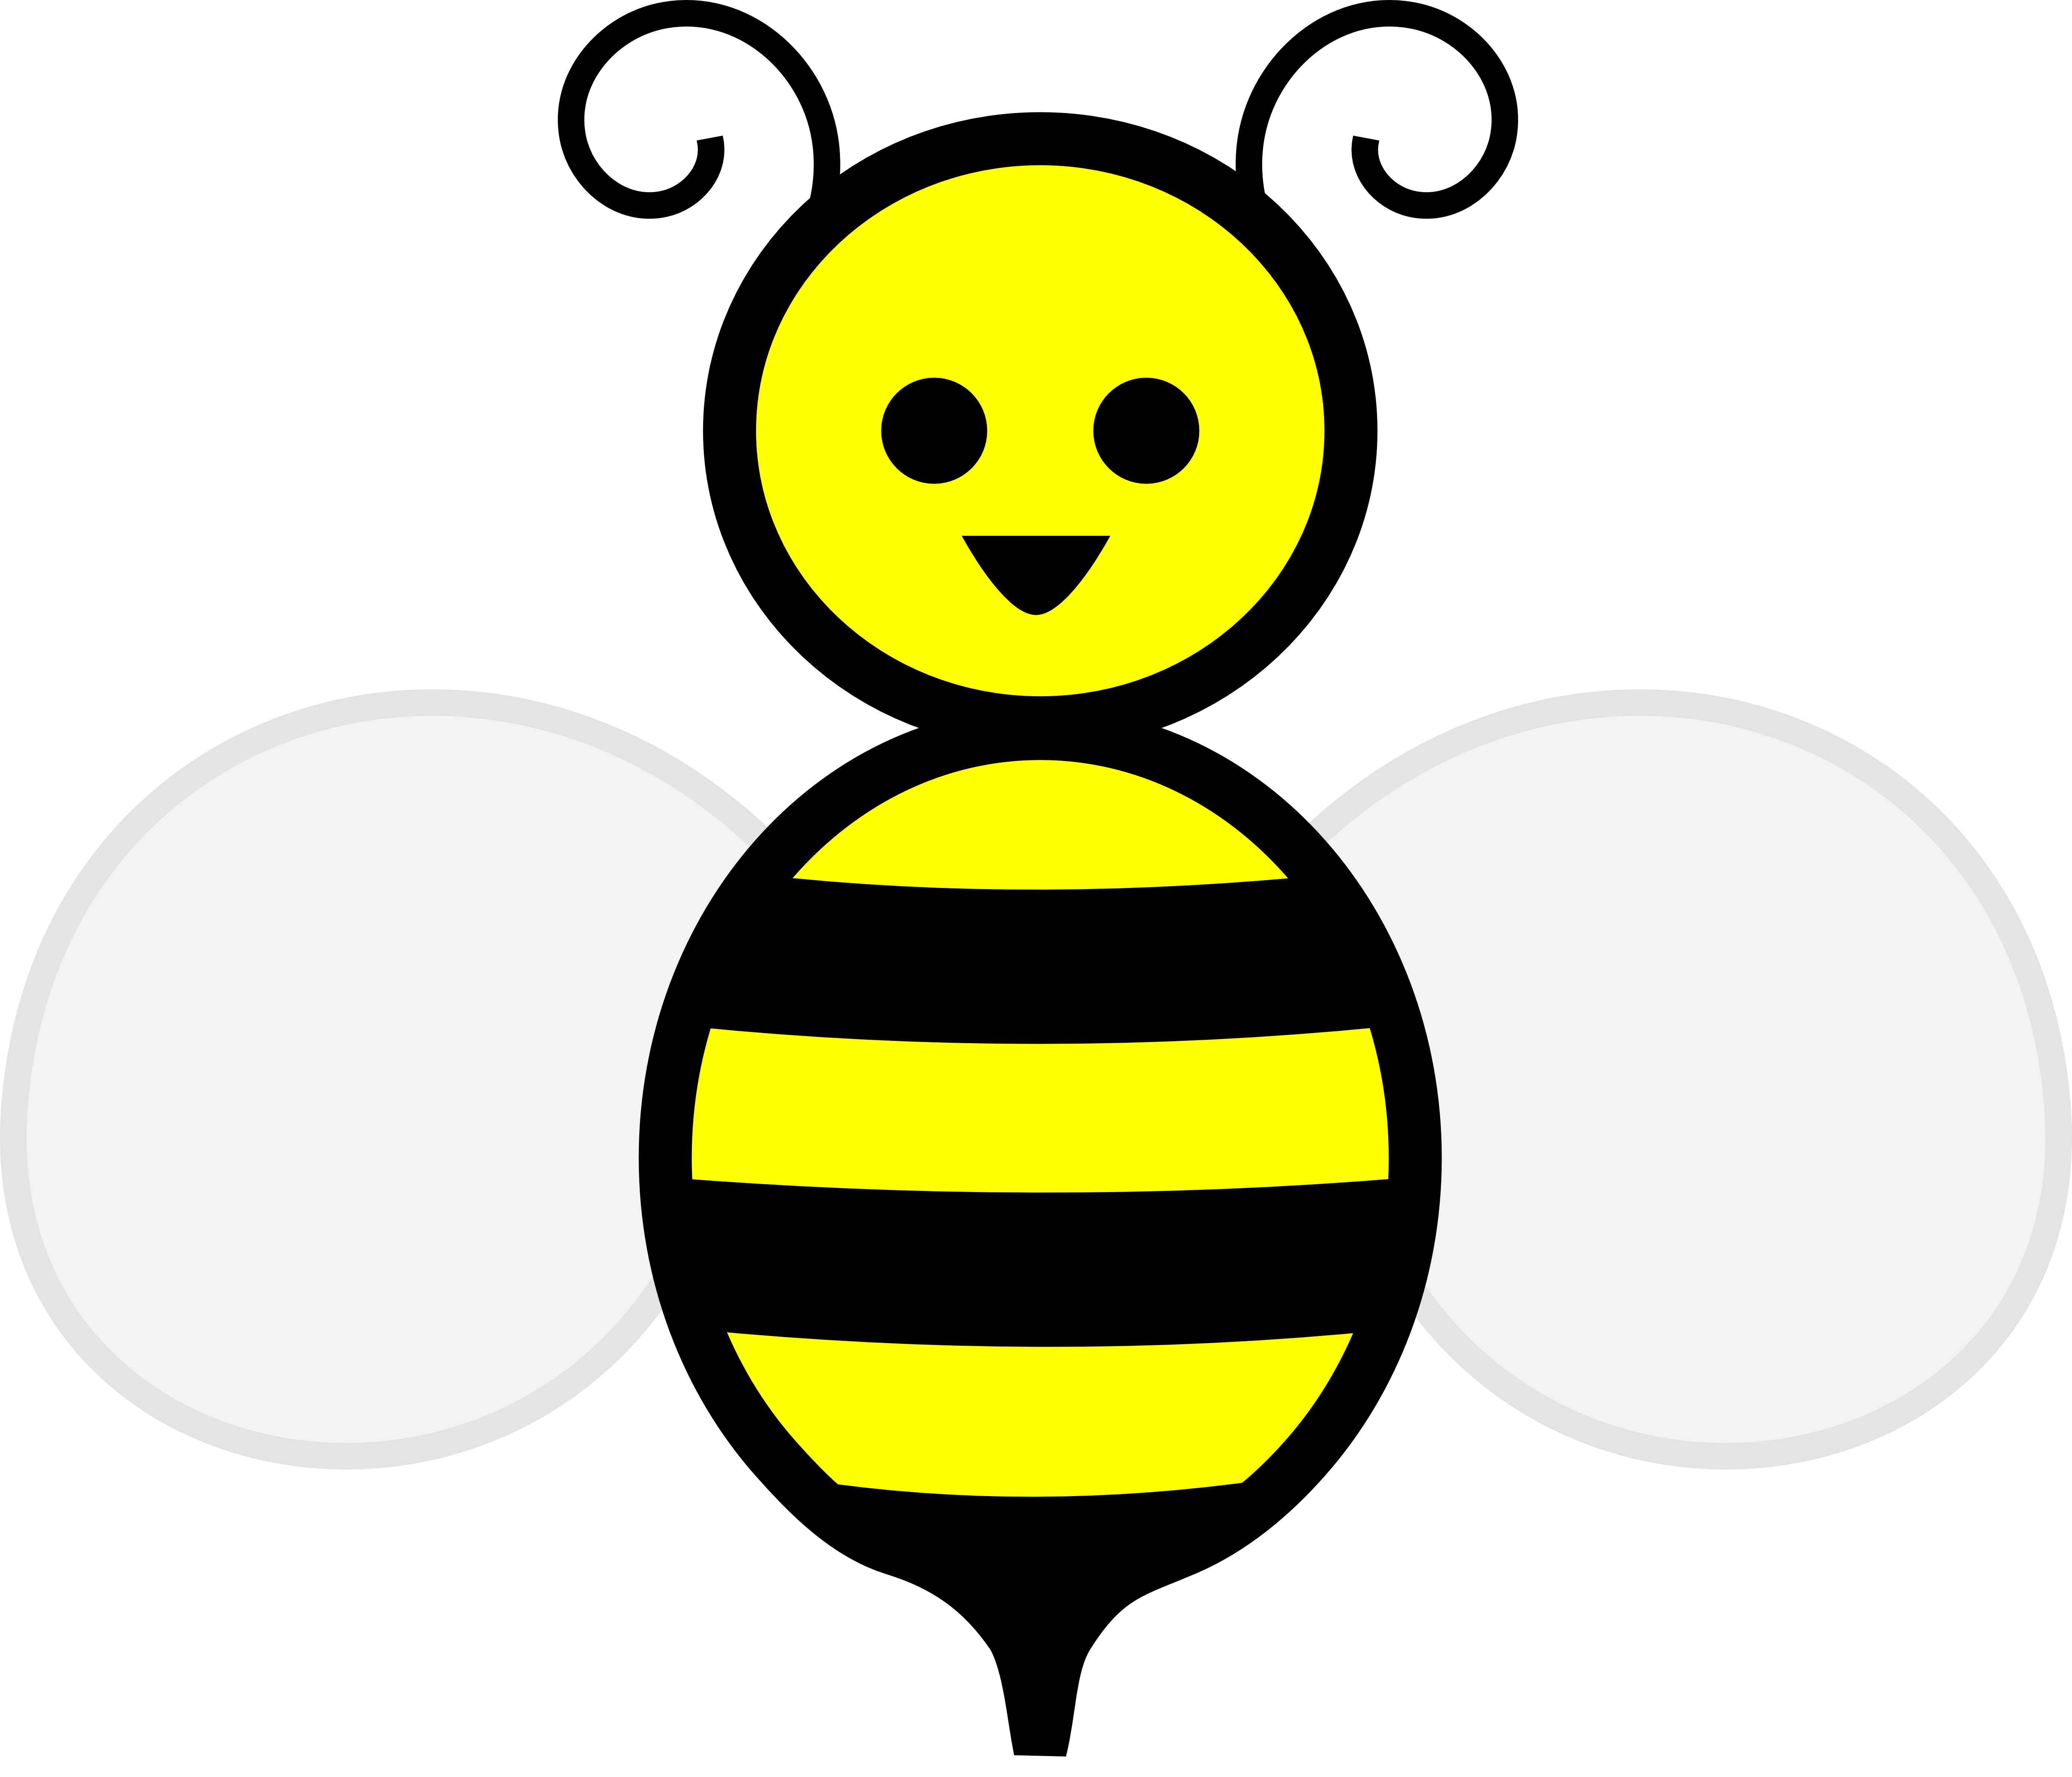 Honey bee clip art images free clipart images clipartwiz clipartix